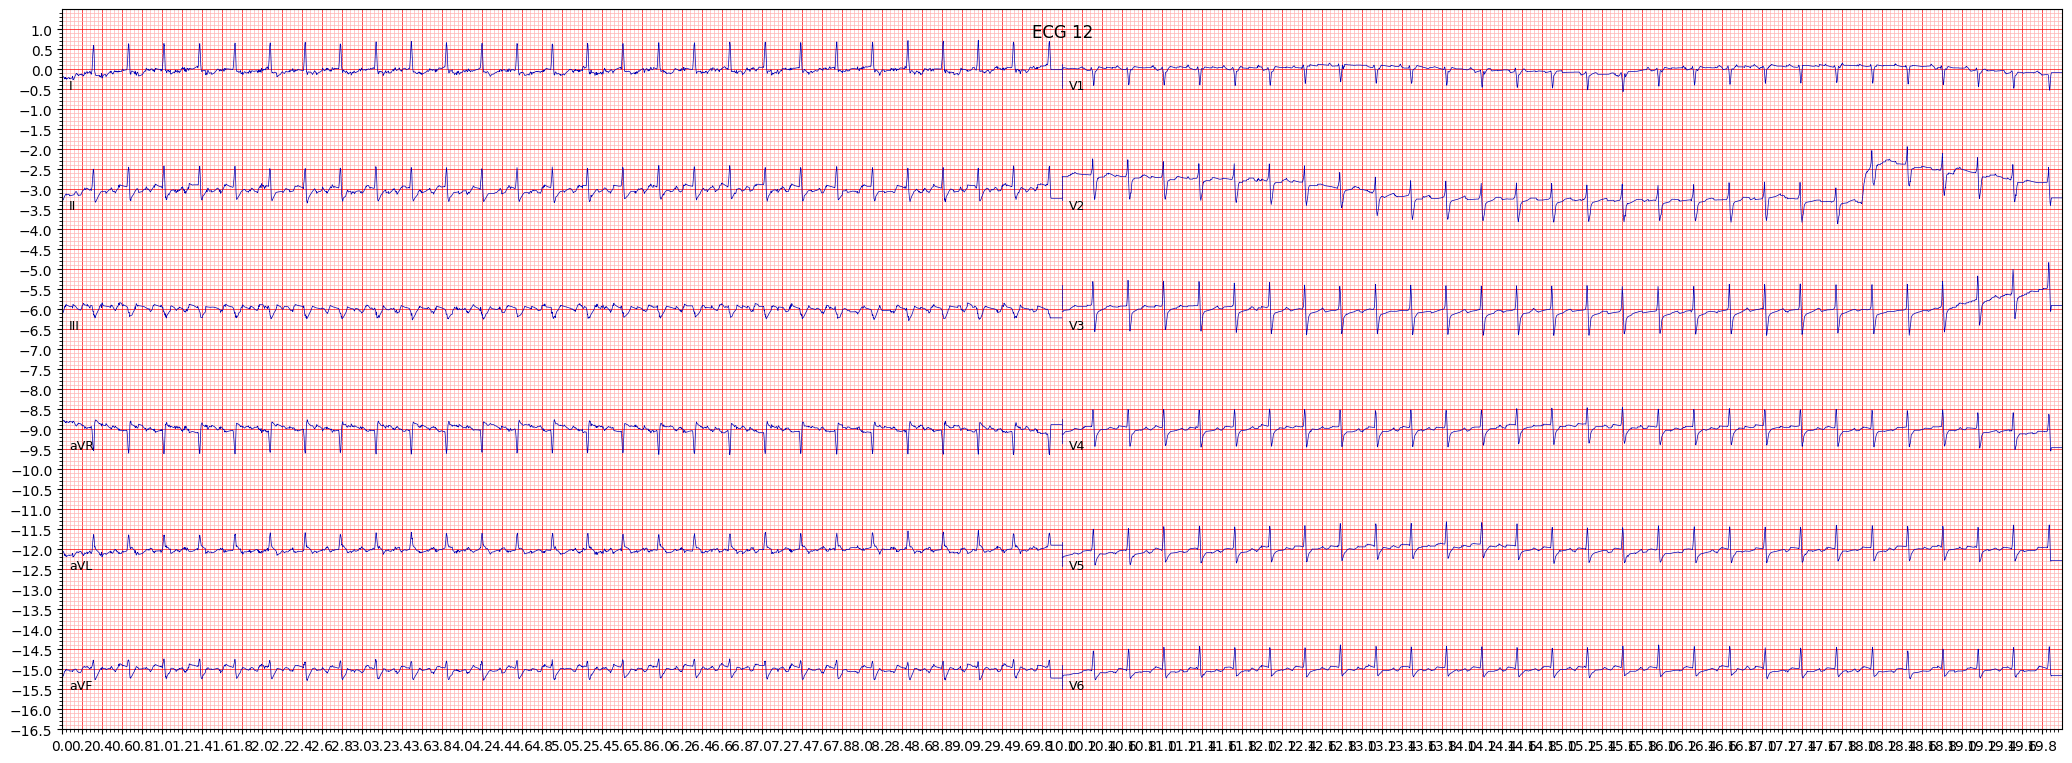 paroxysmal supraventricular tachycardia (PSVT) example 3476